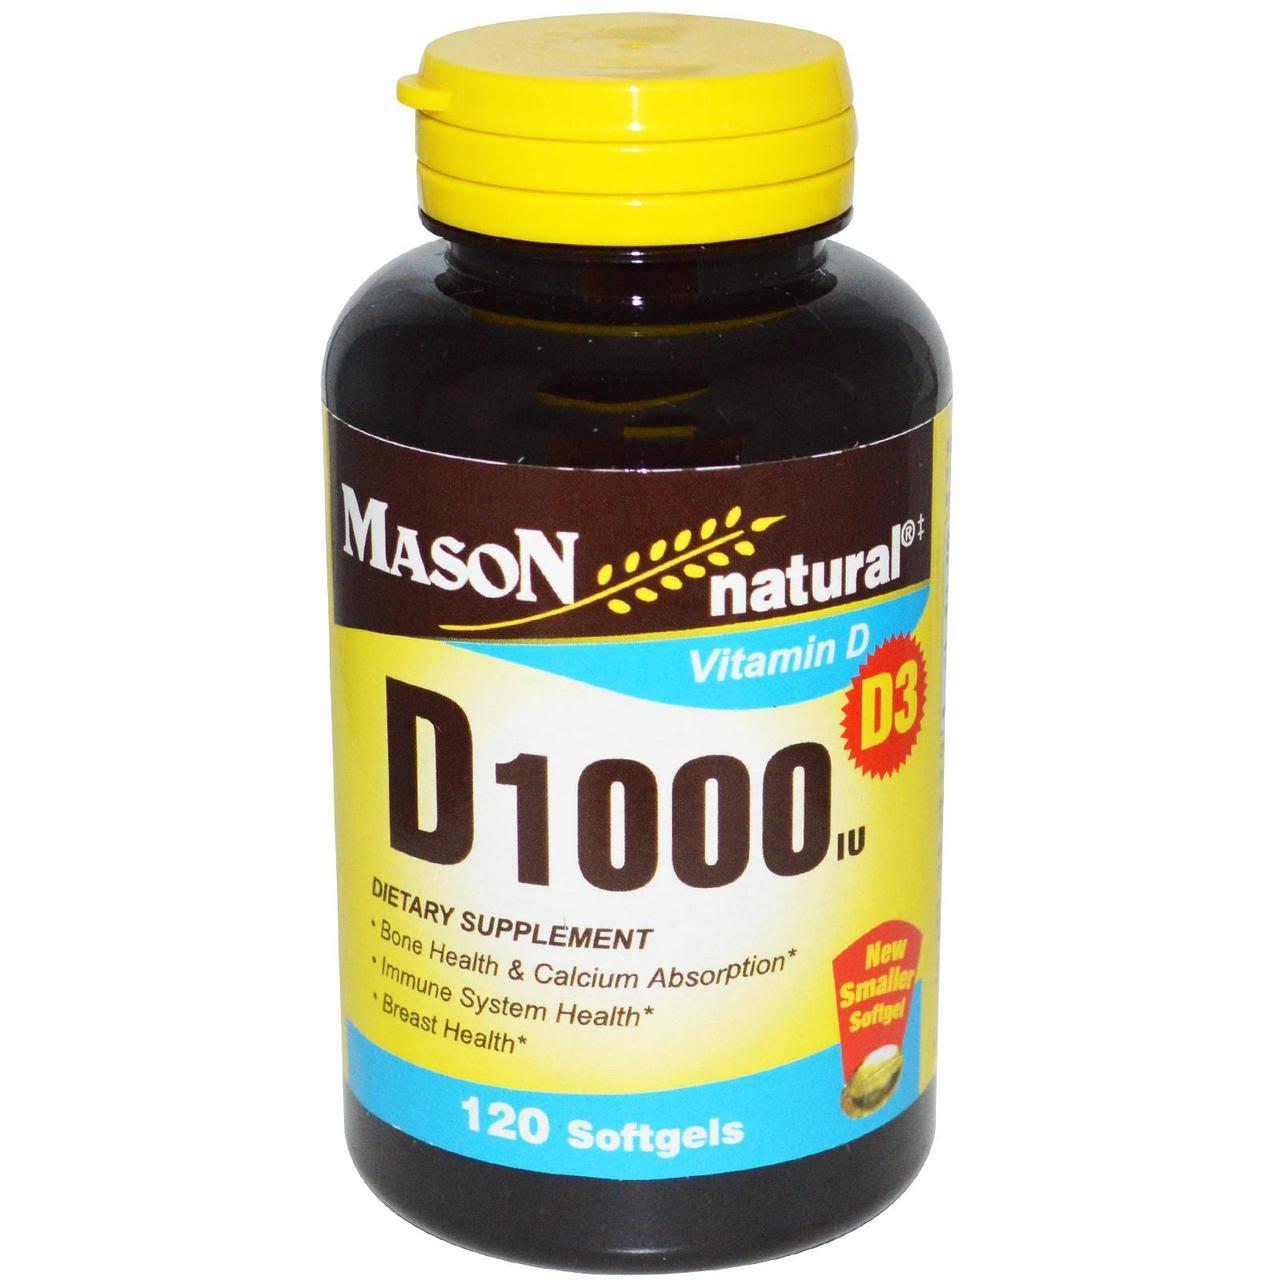 Mason Natural Vitamin D3 Dietary Supplement - 1000 IU, 120 Softgels